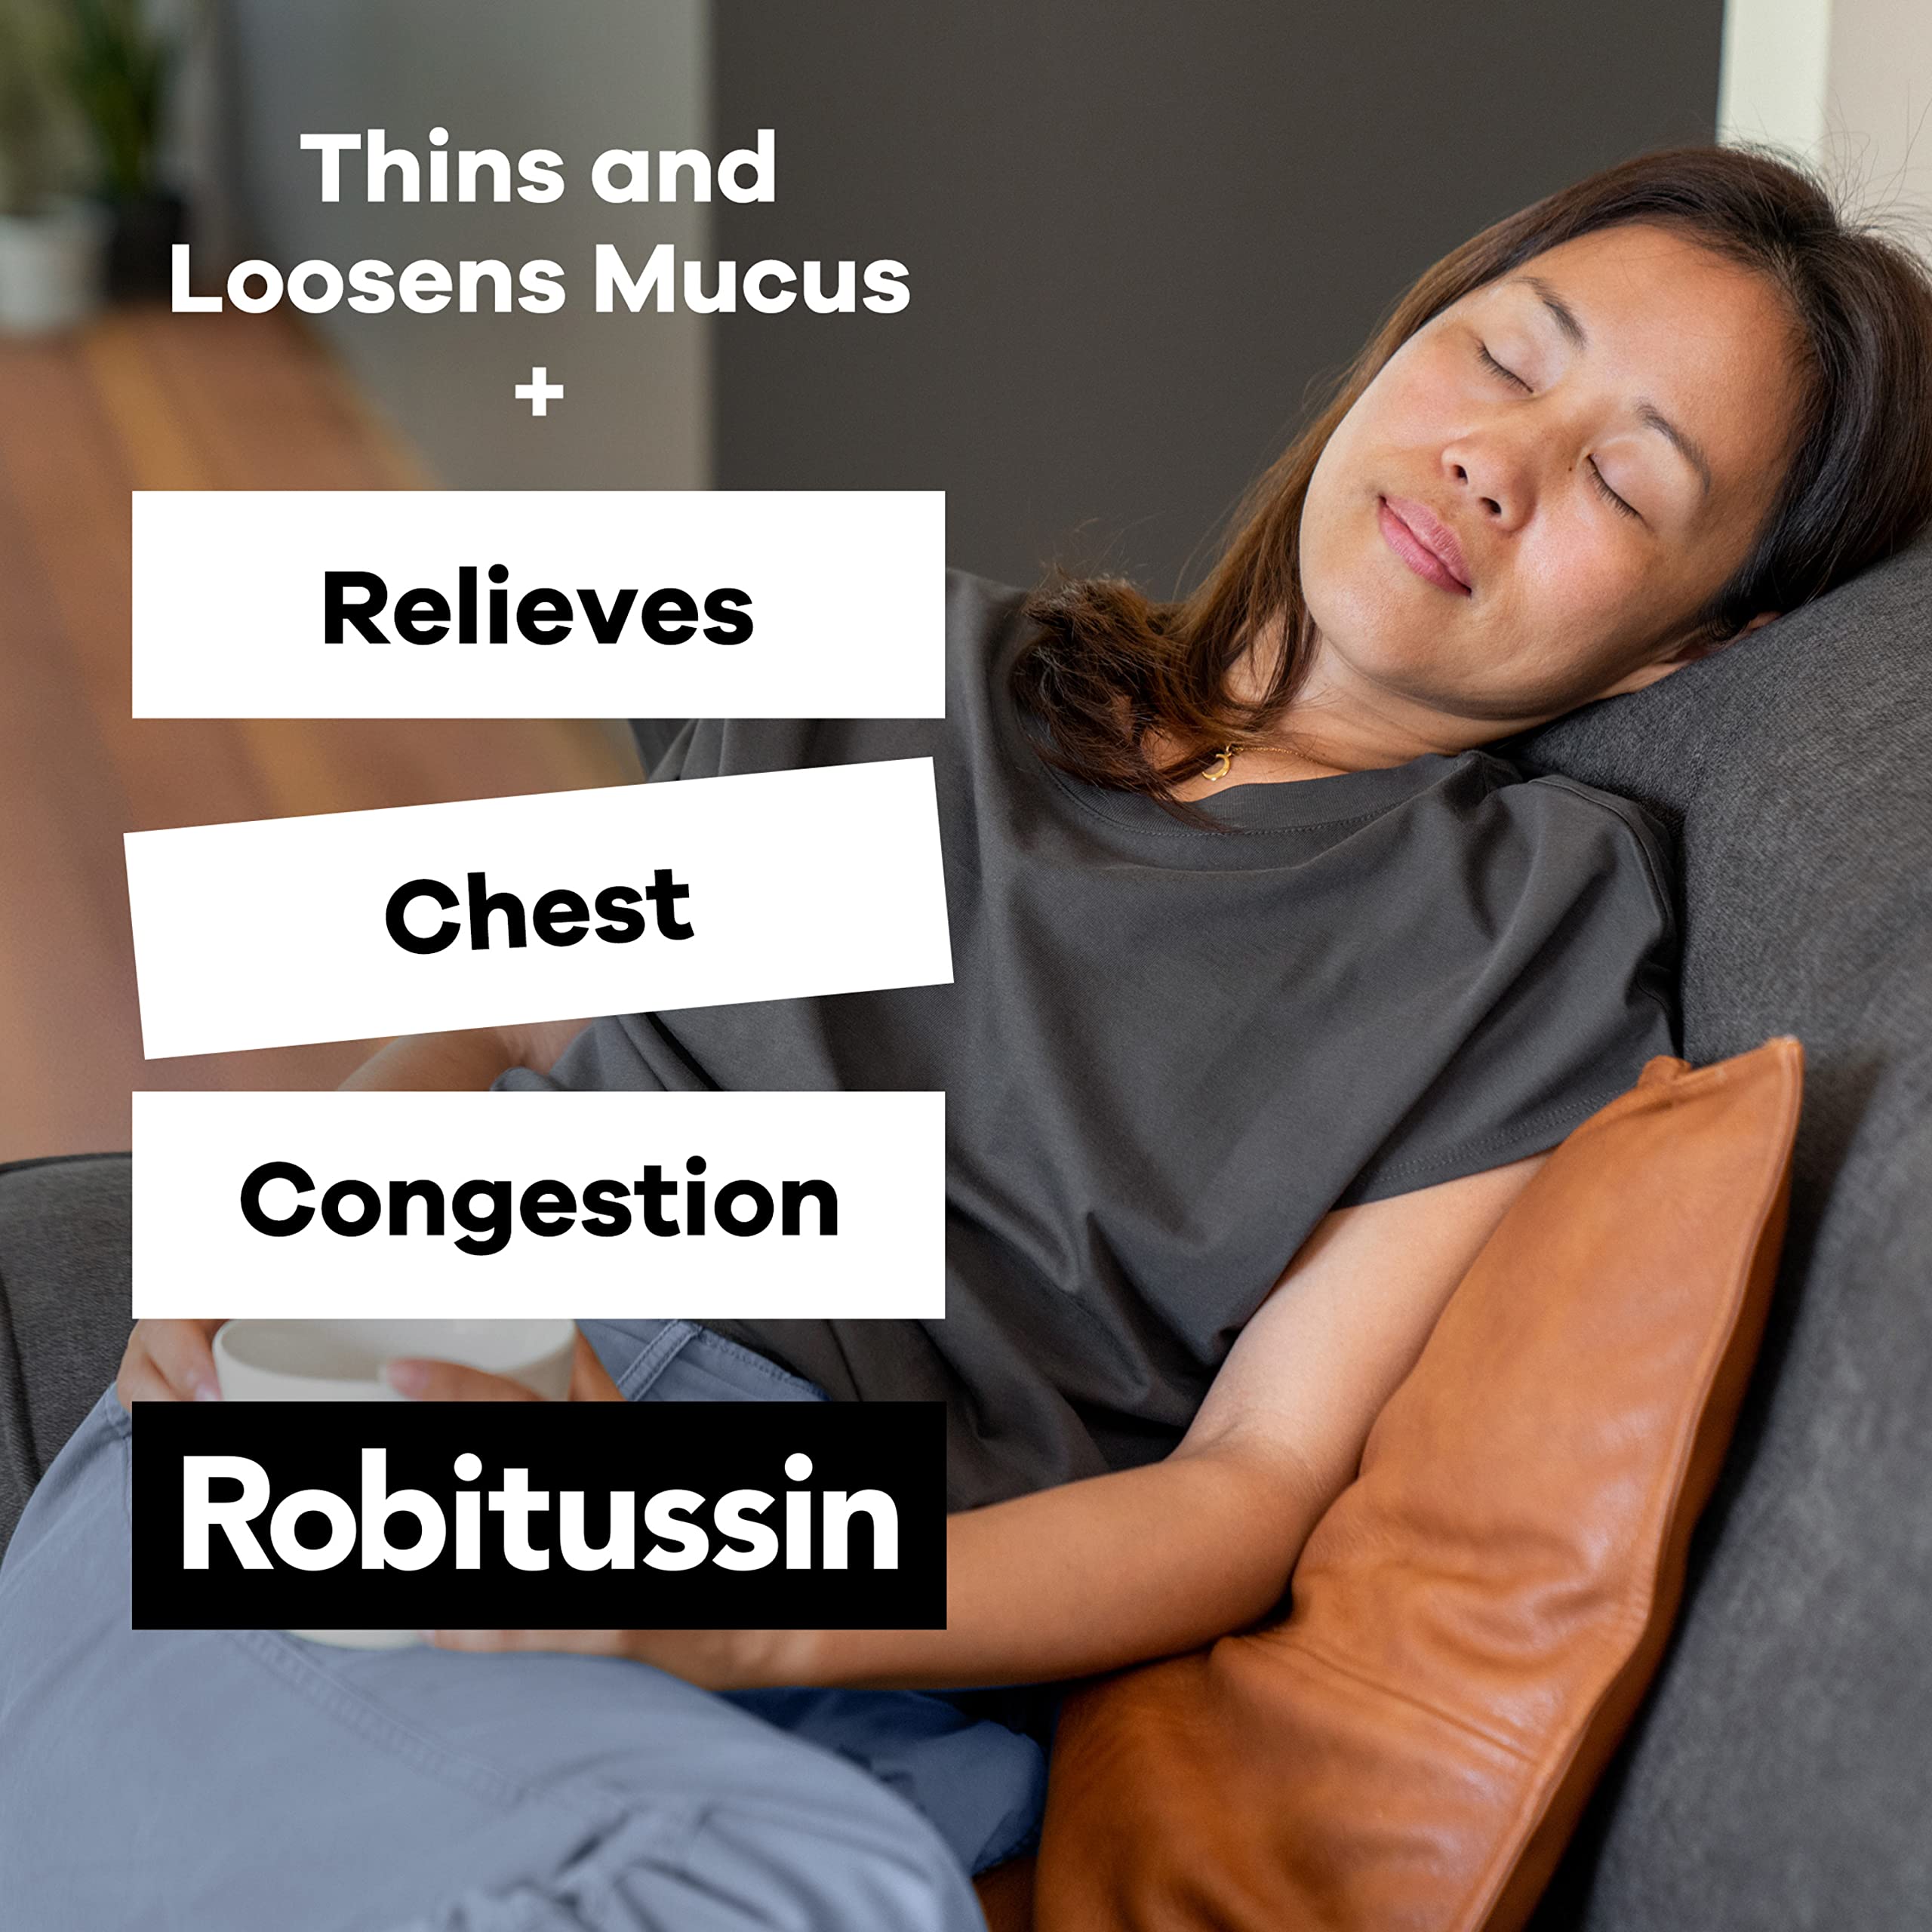 Robitussin Adult Maximum Strength Cough + Chest Congestion DM Max (8 fl. oz. Bottle), Non-Drowsy Cough Suppressant & Expectorant, Raspberry Flavor